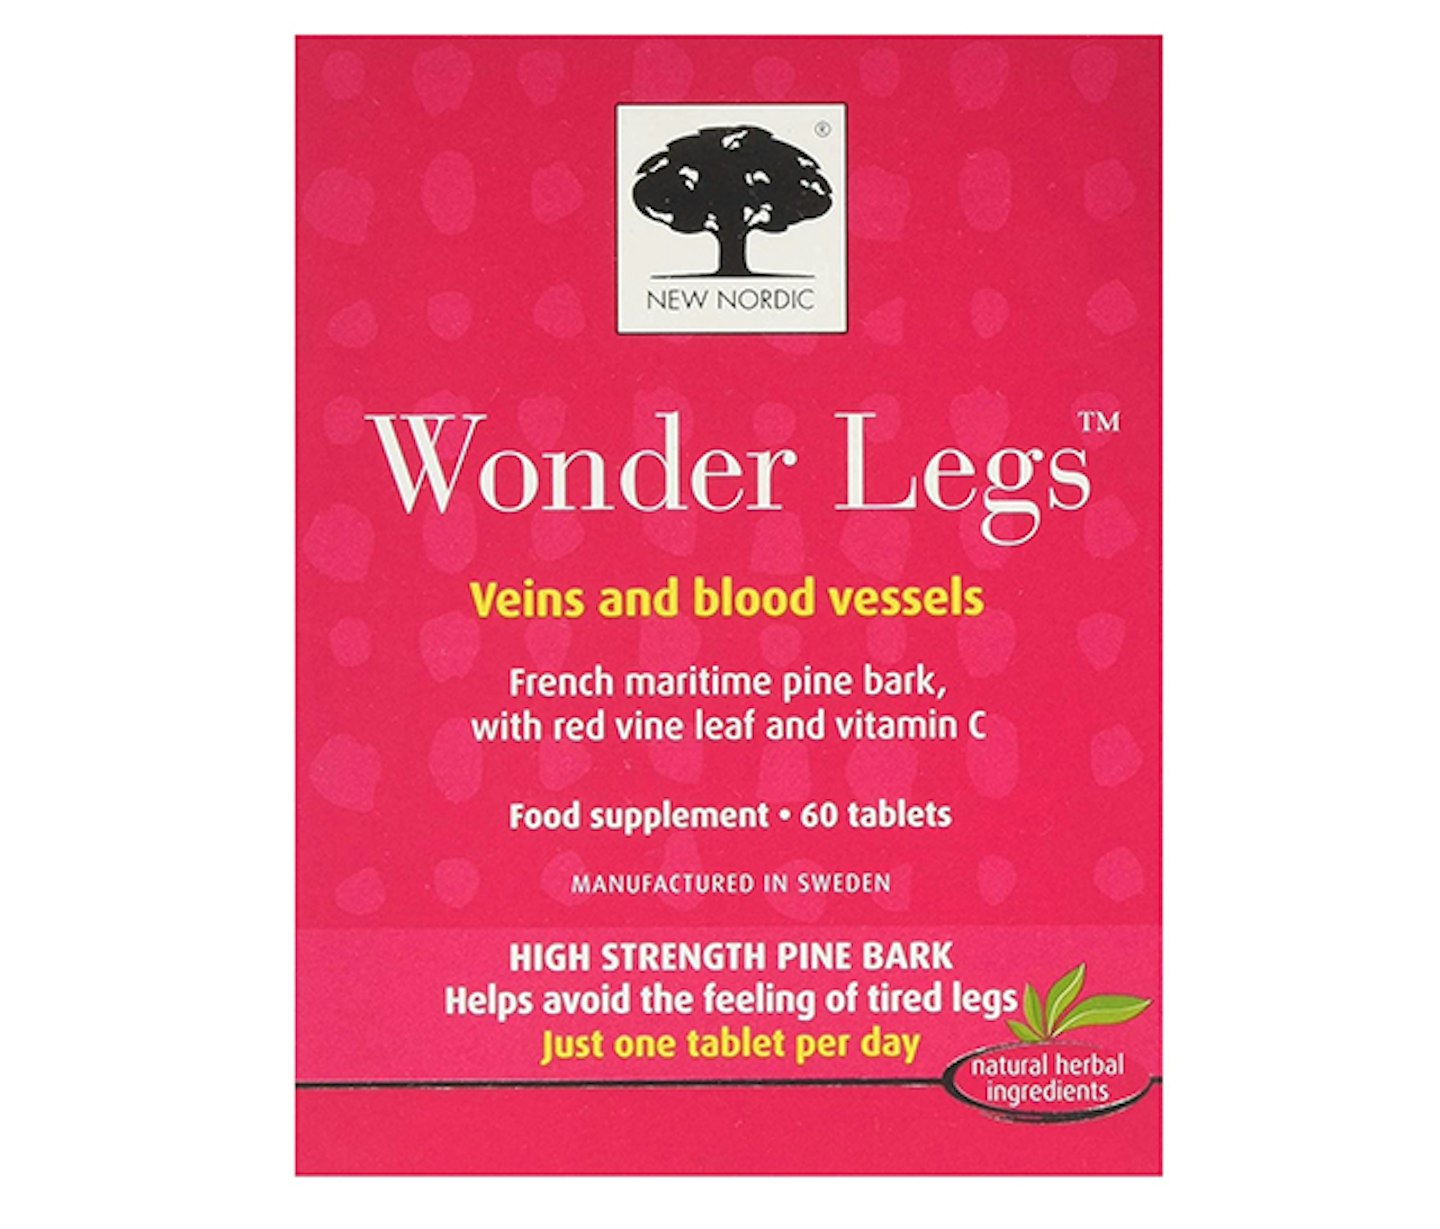 New Nordic Wonder Legs tablets x 30